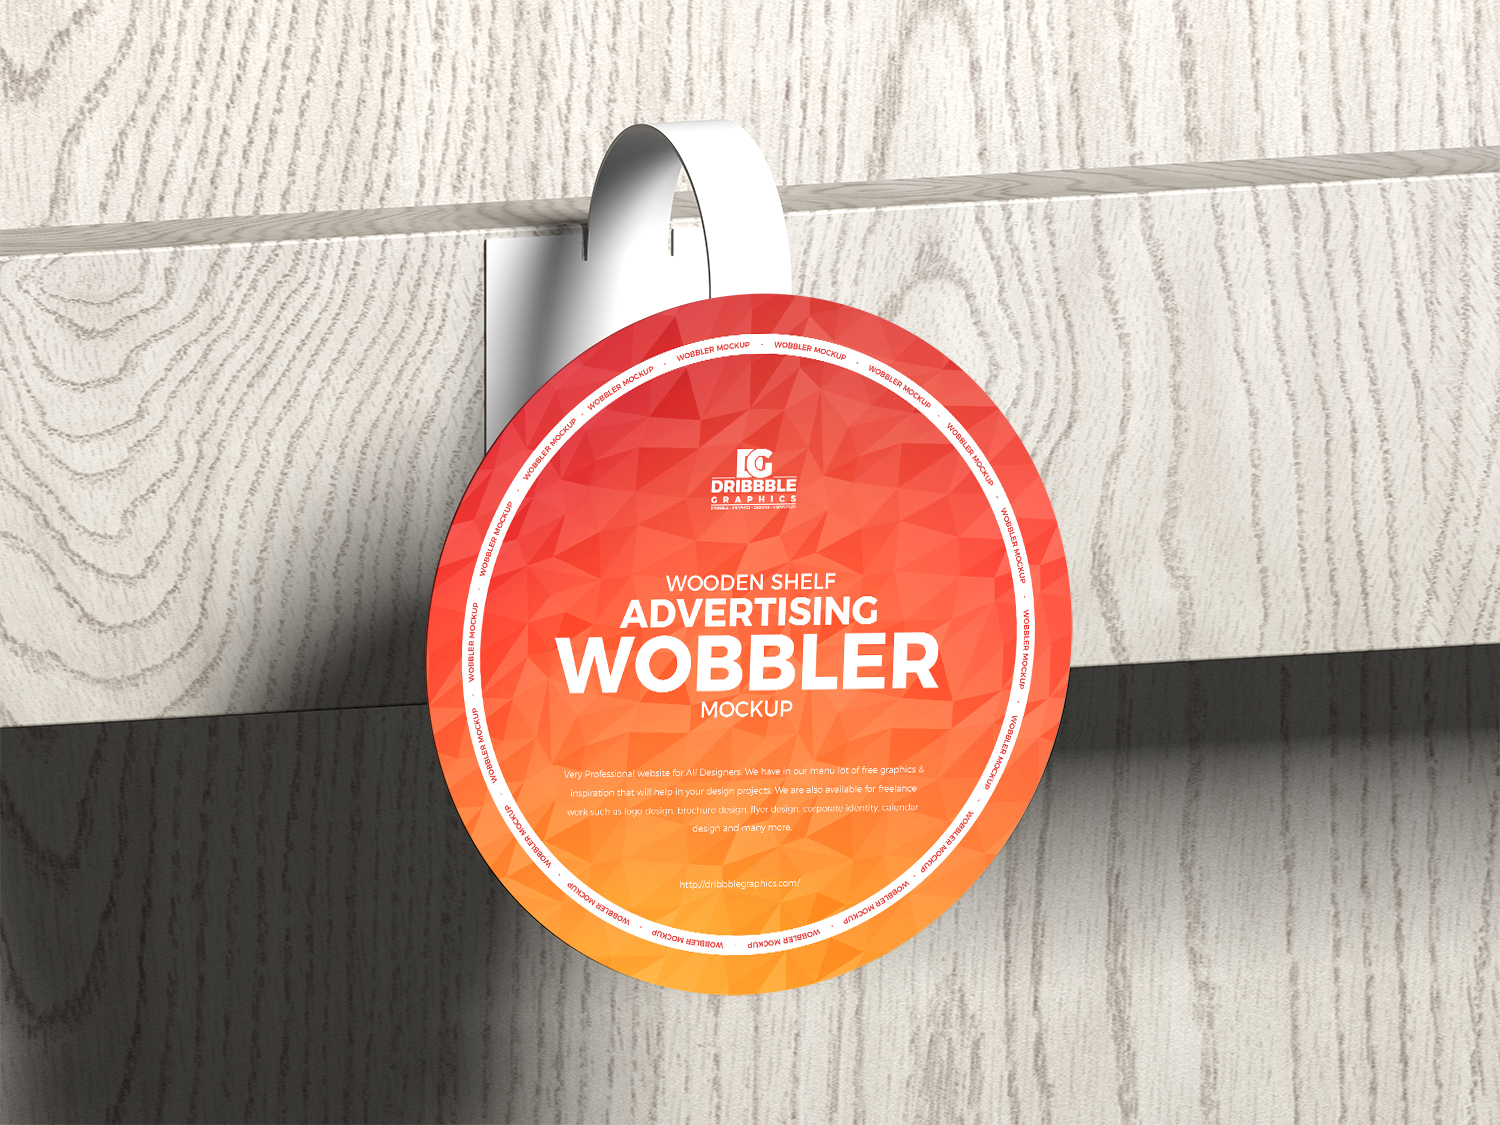 Wooden Shelf Advertising Wobbler Mockup